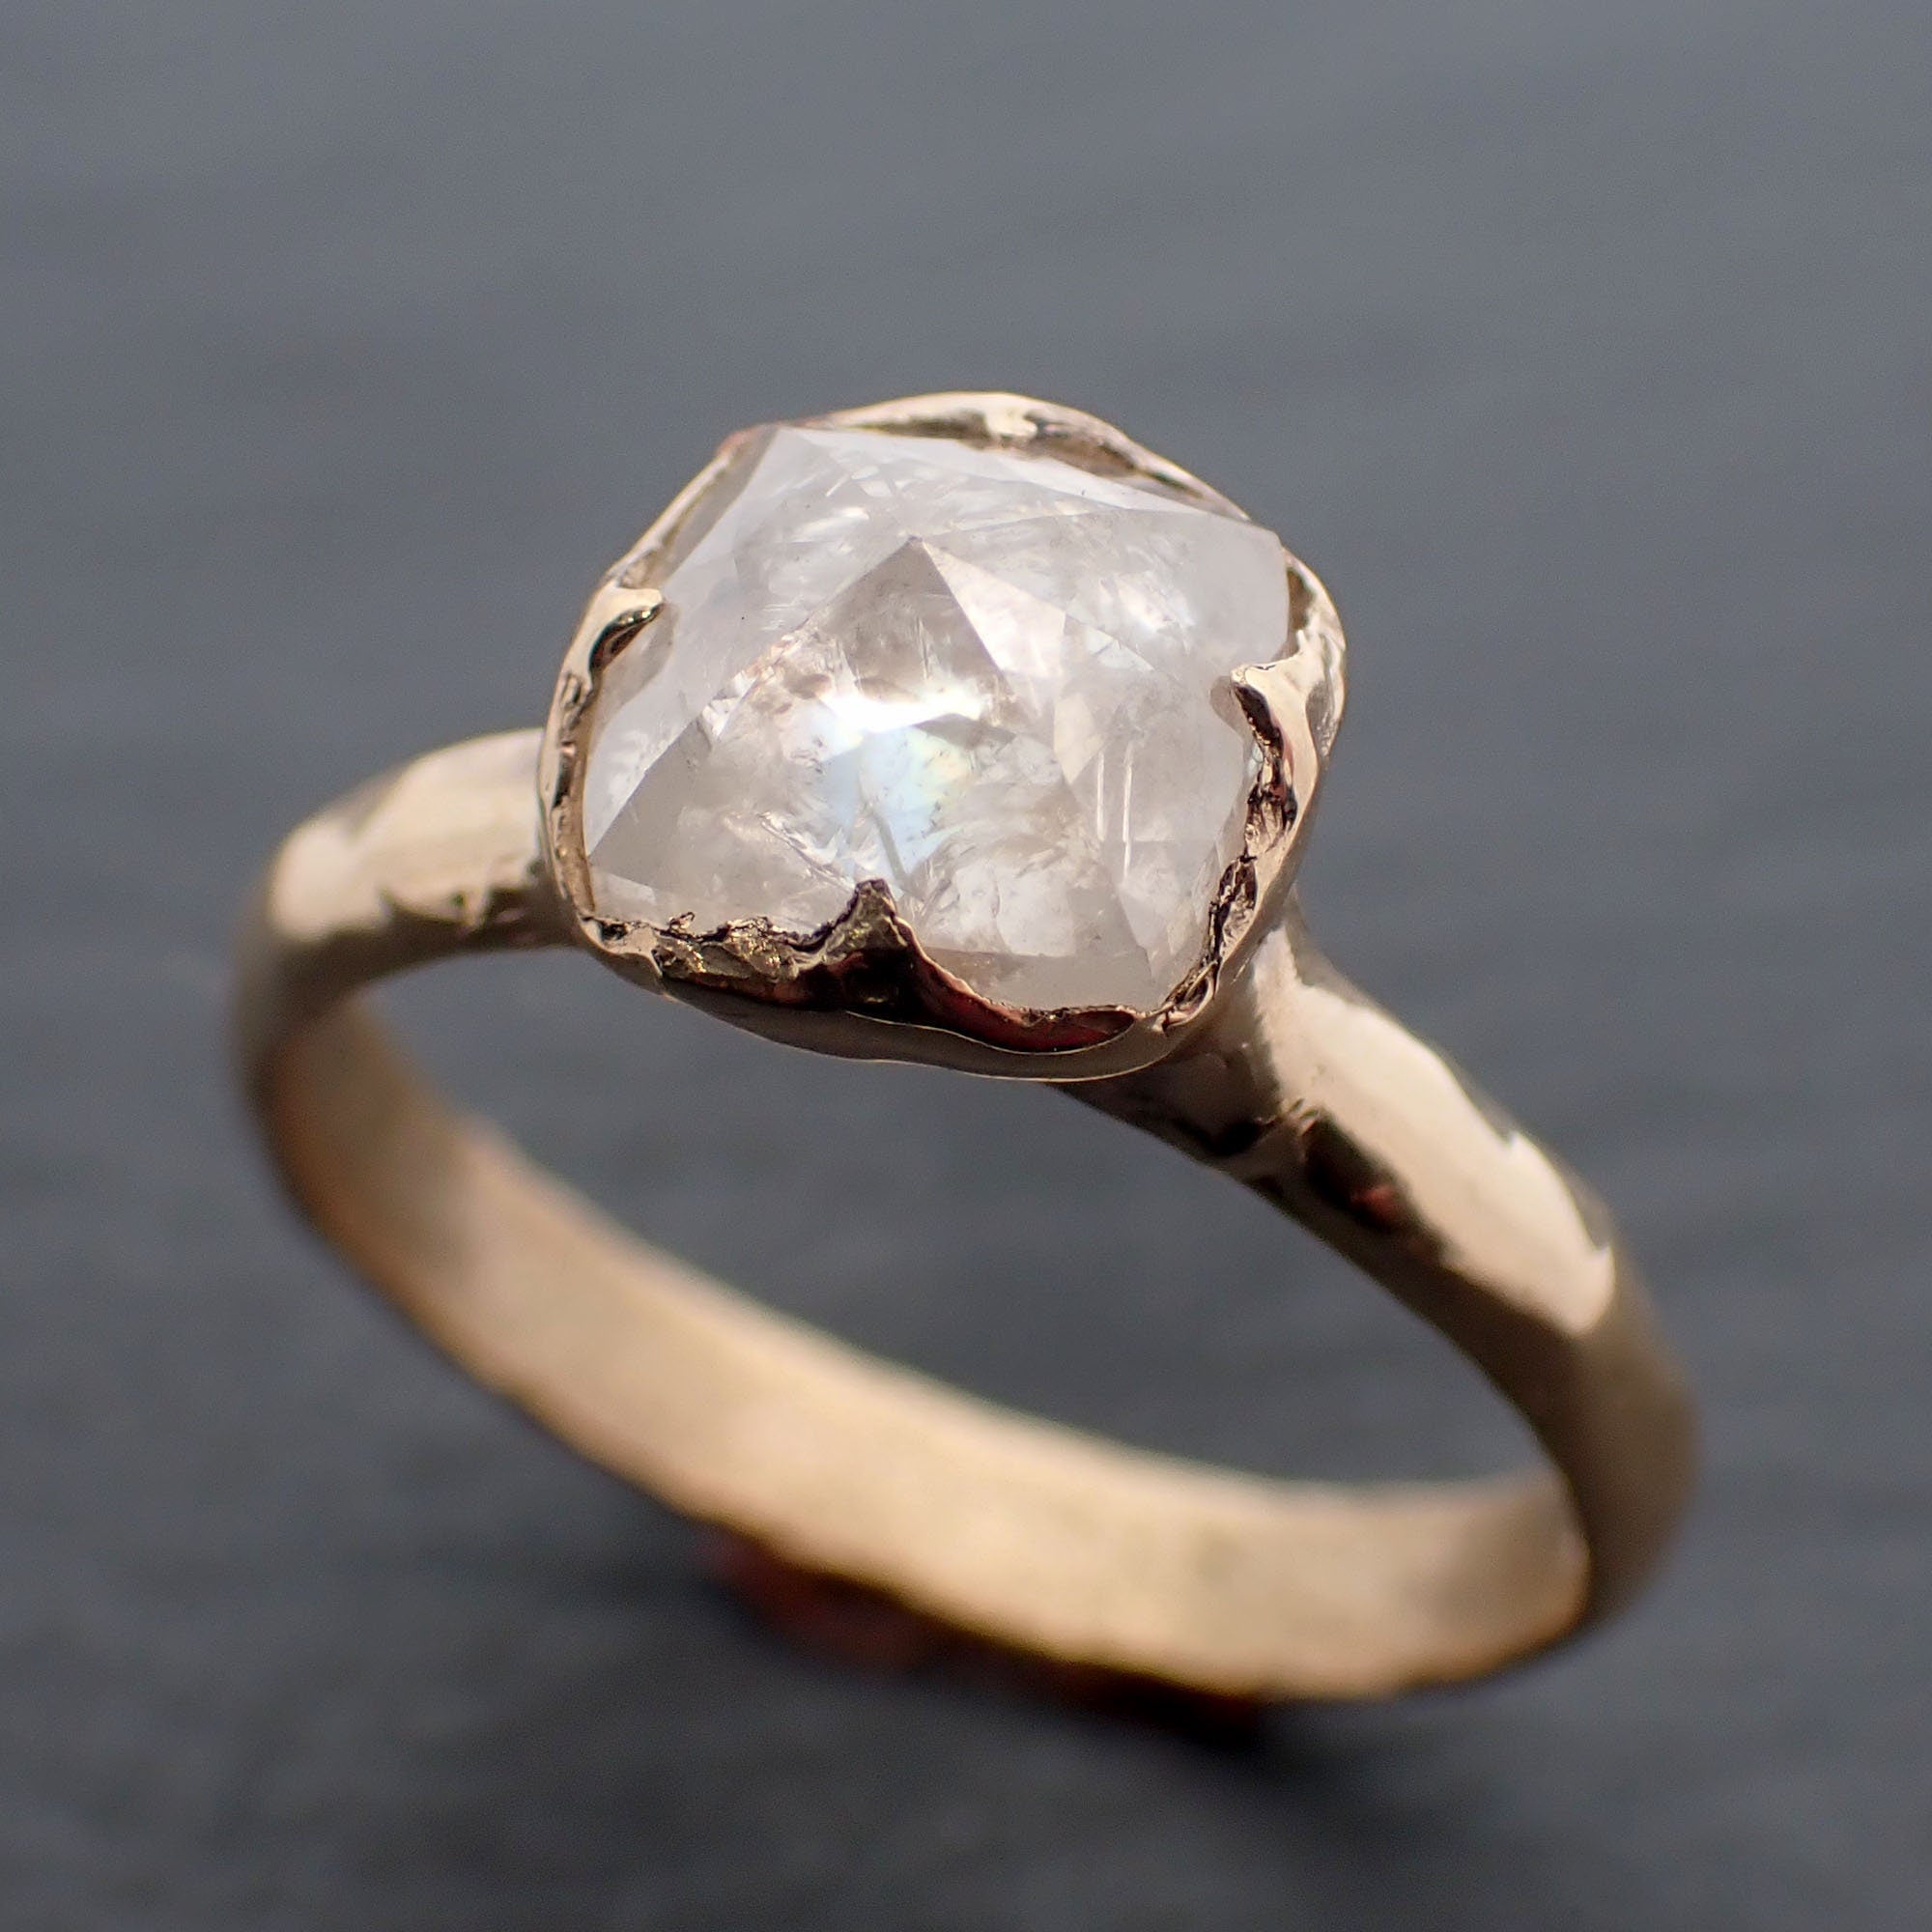 Fancy cut white Diamond Solitaire Engagement 18k yellow Gold Wedding Ring byAngeline 3277